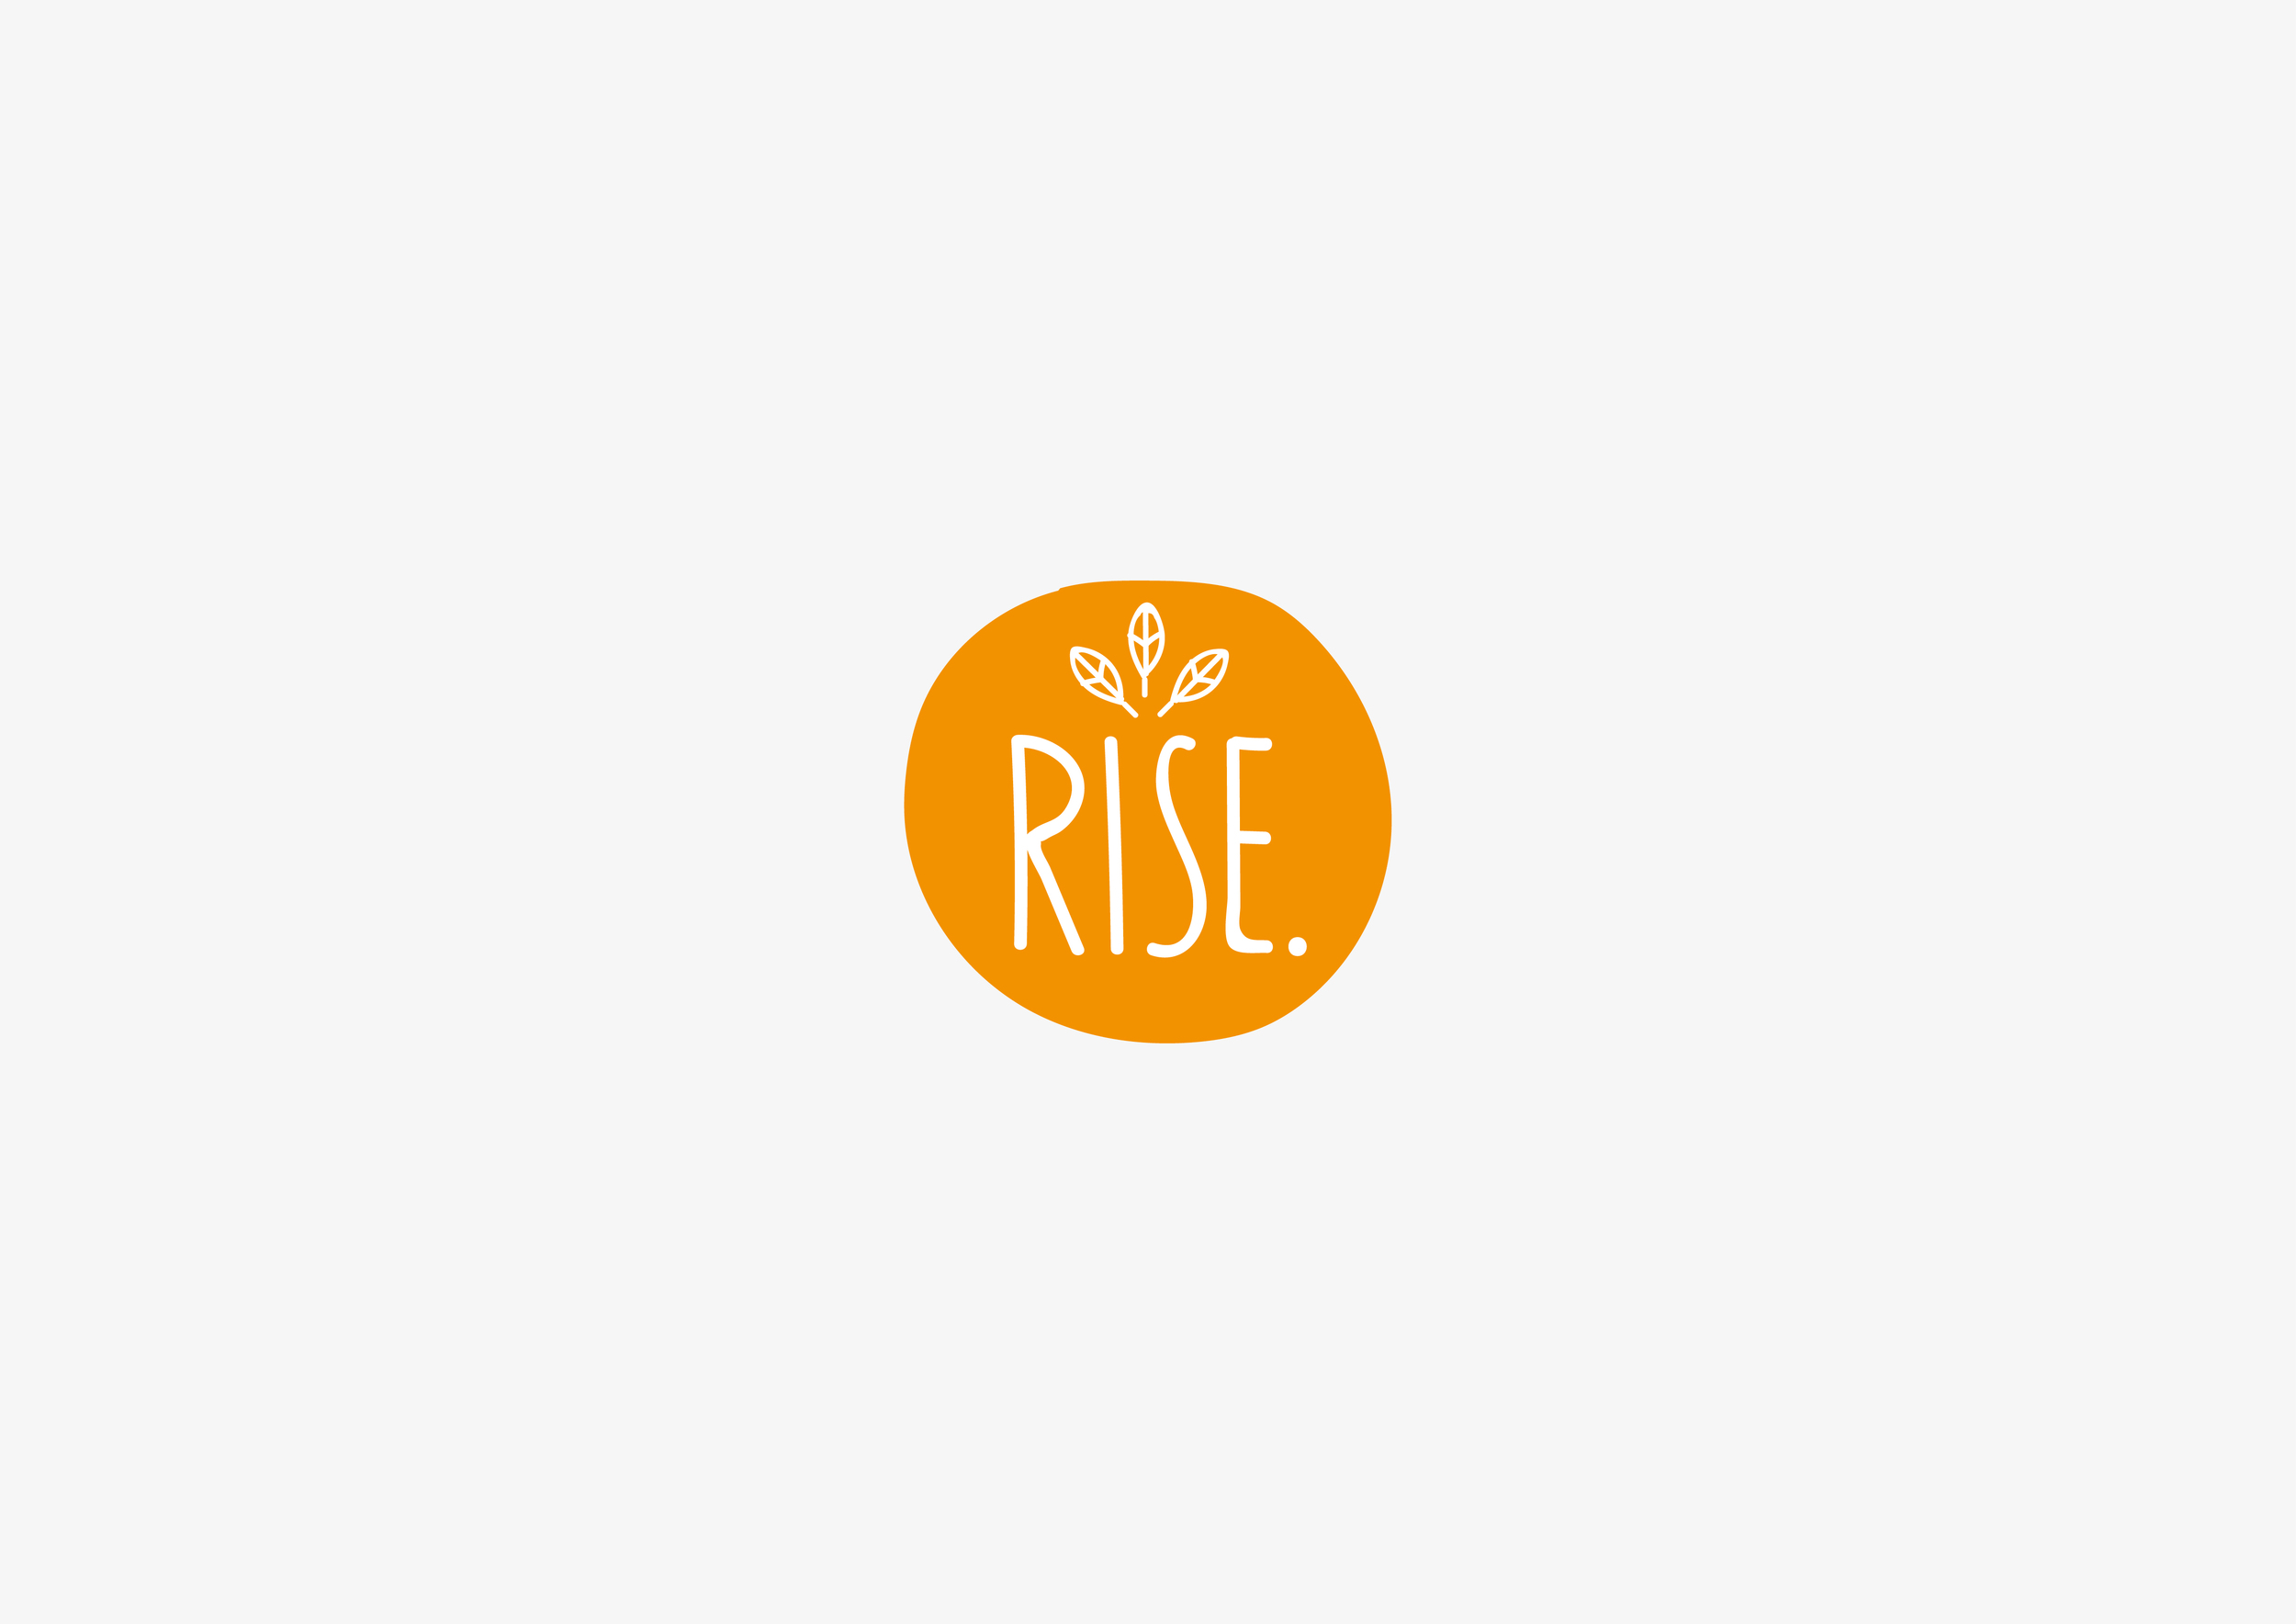 Freelance Logo Designer UK. Rise. orange circle brand logo in platinum background